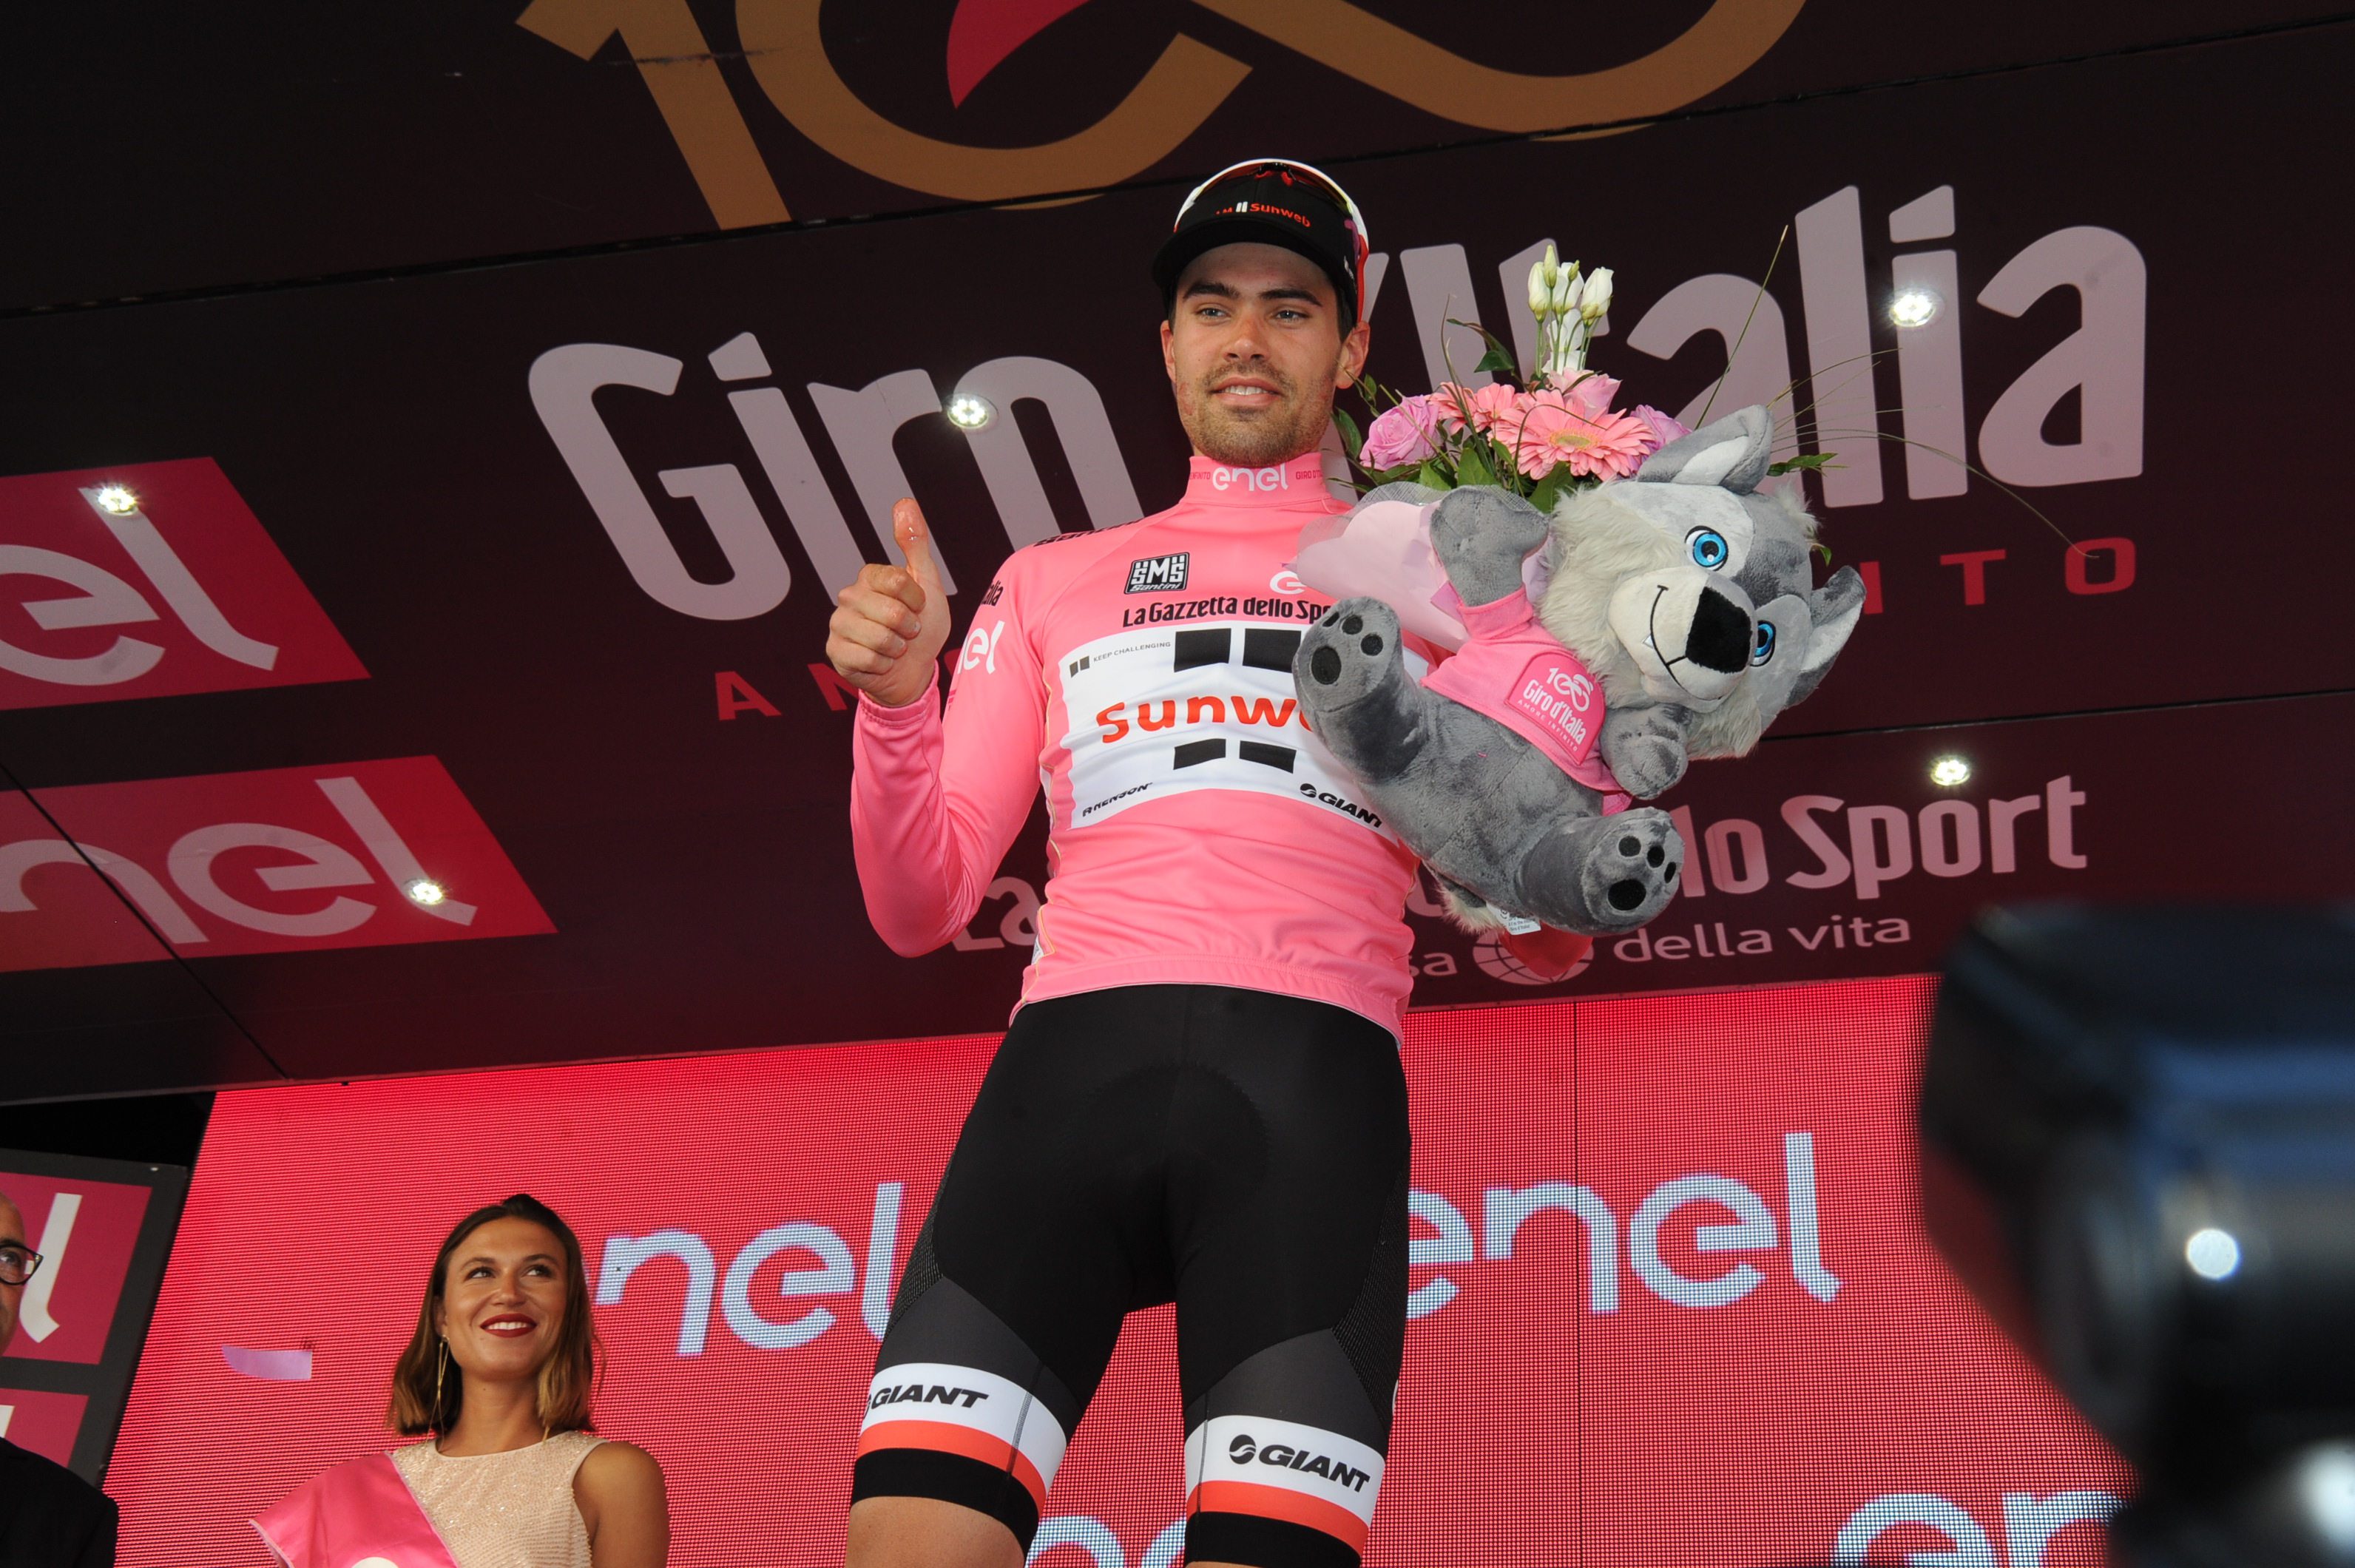 25-05-2017 Giro D'italia; Tappa 18 Moena - Ortisei; 2017, Team Sunweb; Dumoulin, Tom; Ortisei;